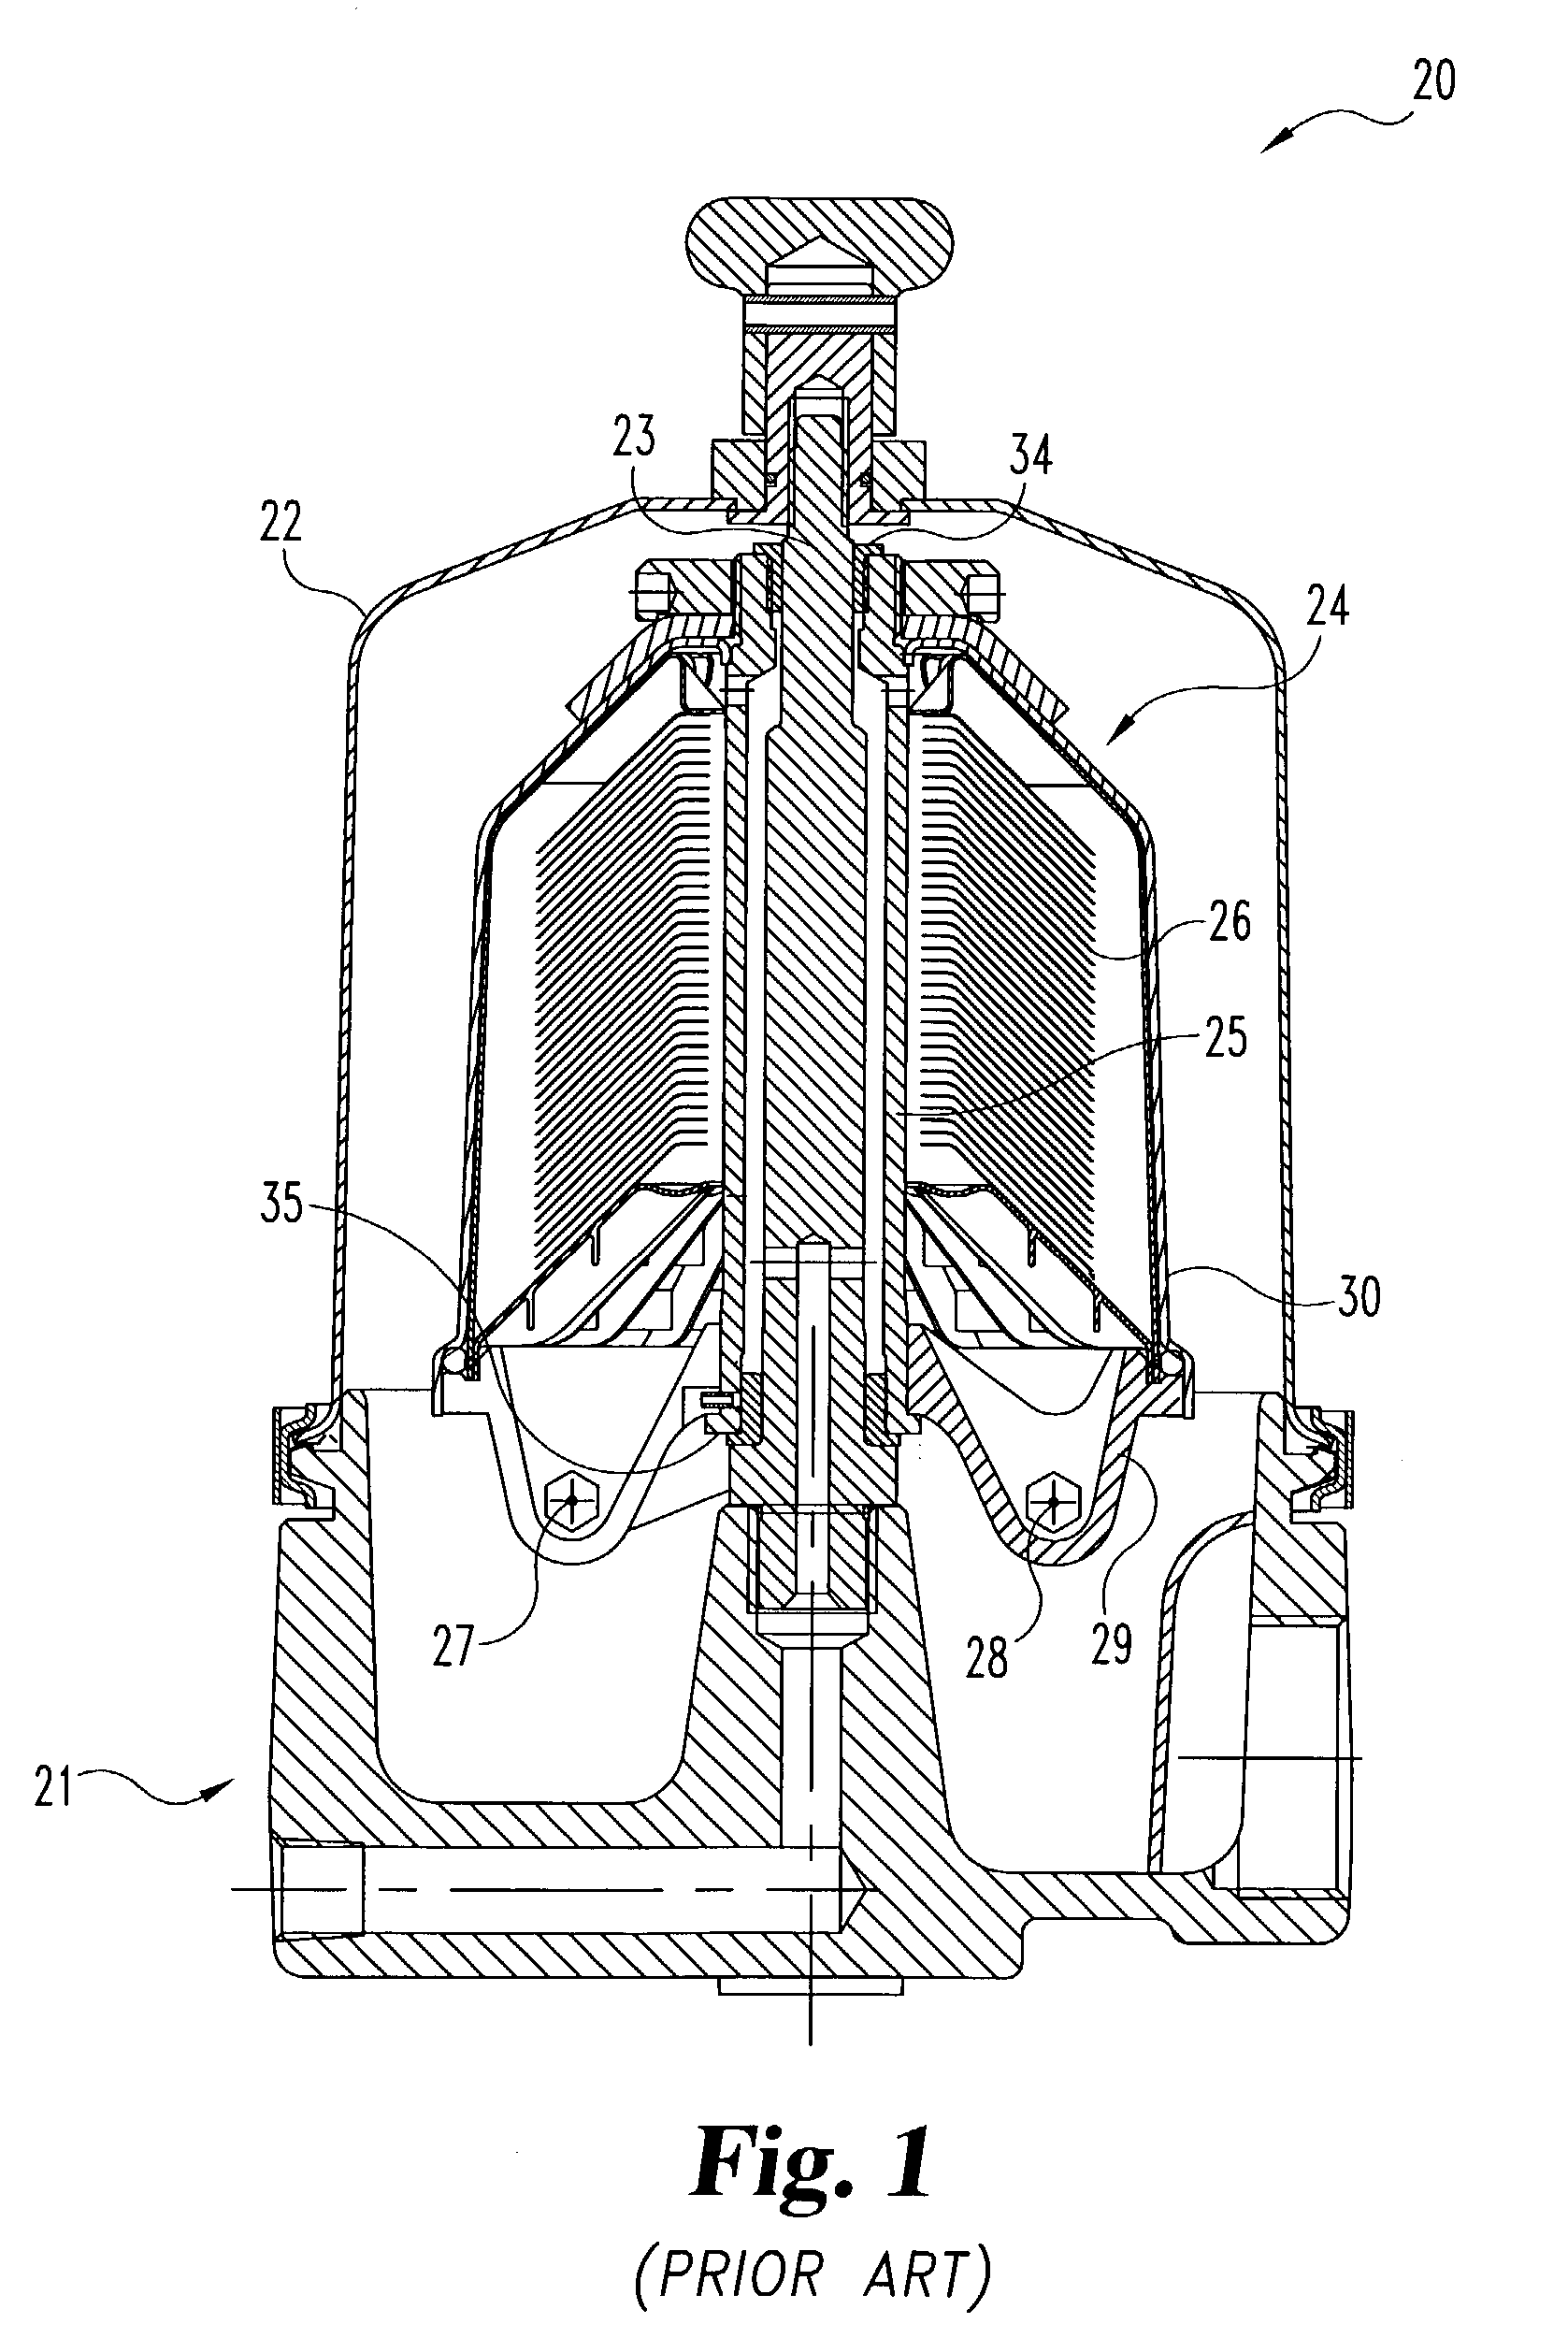 Integral air/oil coalescer for a centrifuge